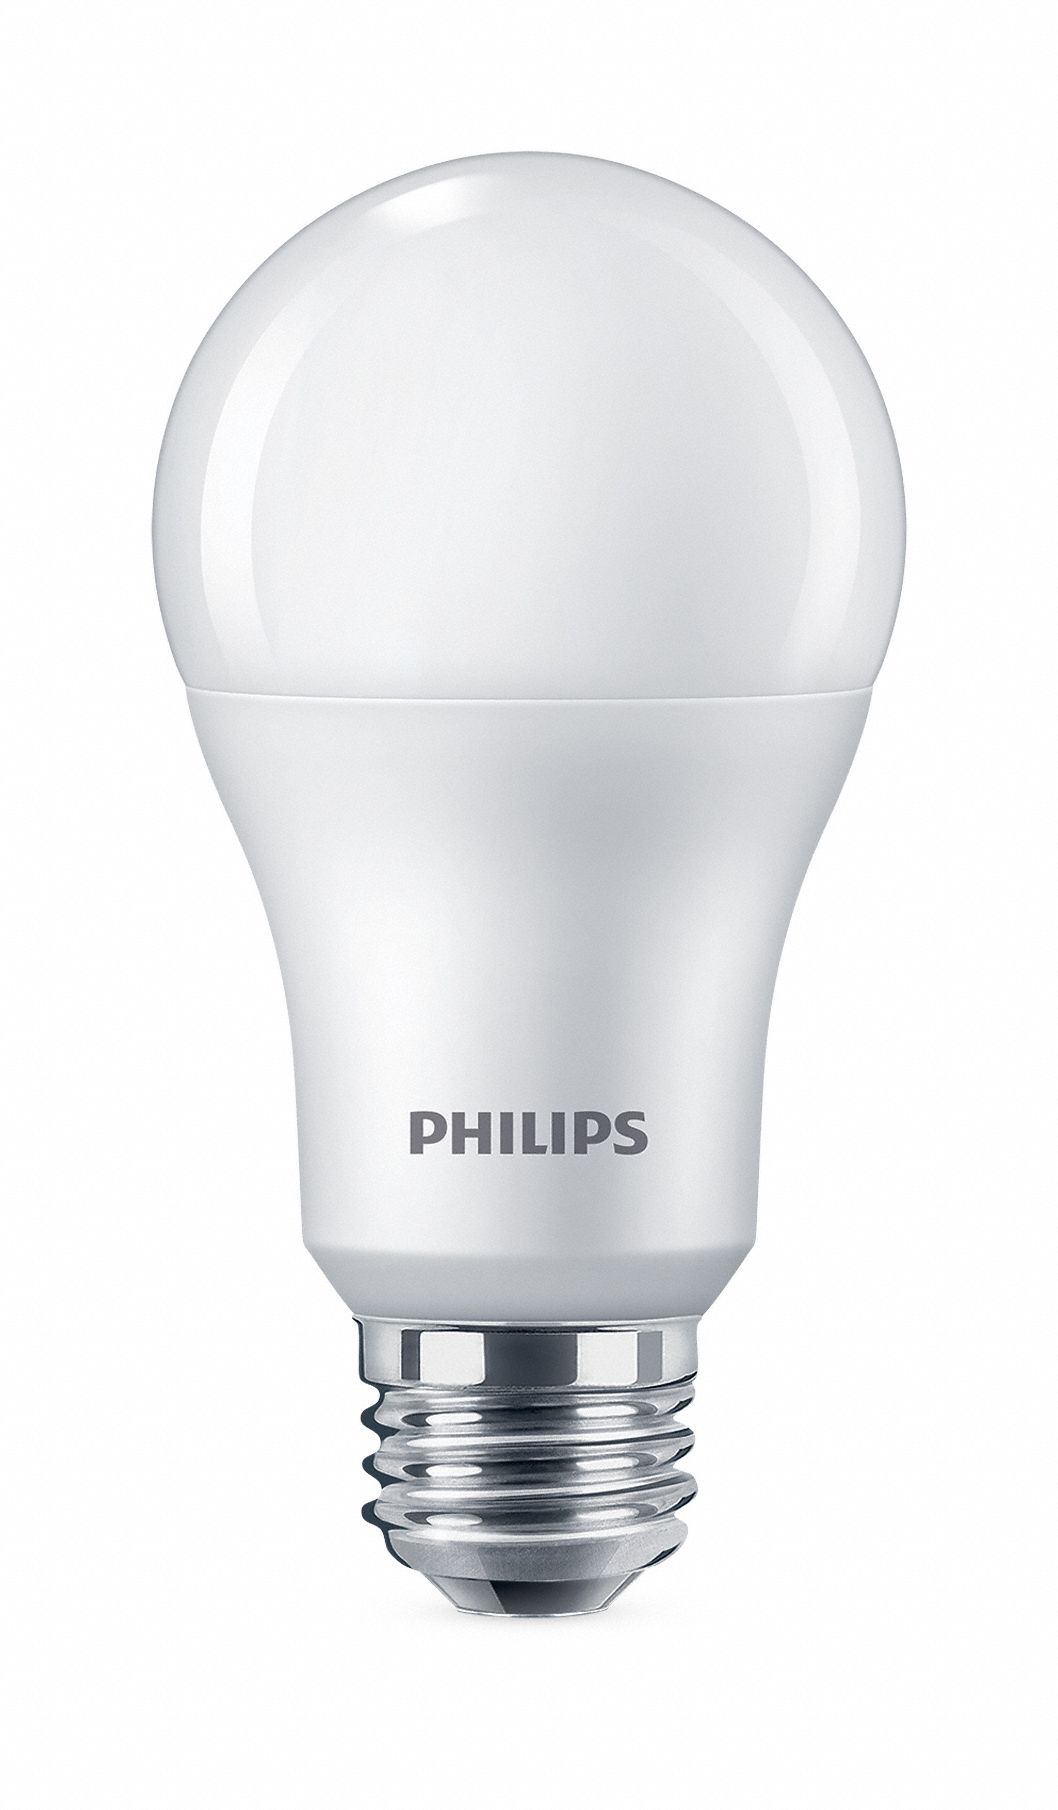 Regulatie Isoleren Leerling PHILIPS, A19, Medium Screw (E26), LED Lamp Replacement - 784N97|13.5A19/LED/927/FR/P/ND  4/1FB - Grainger